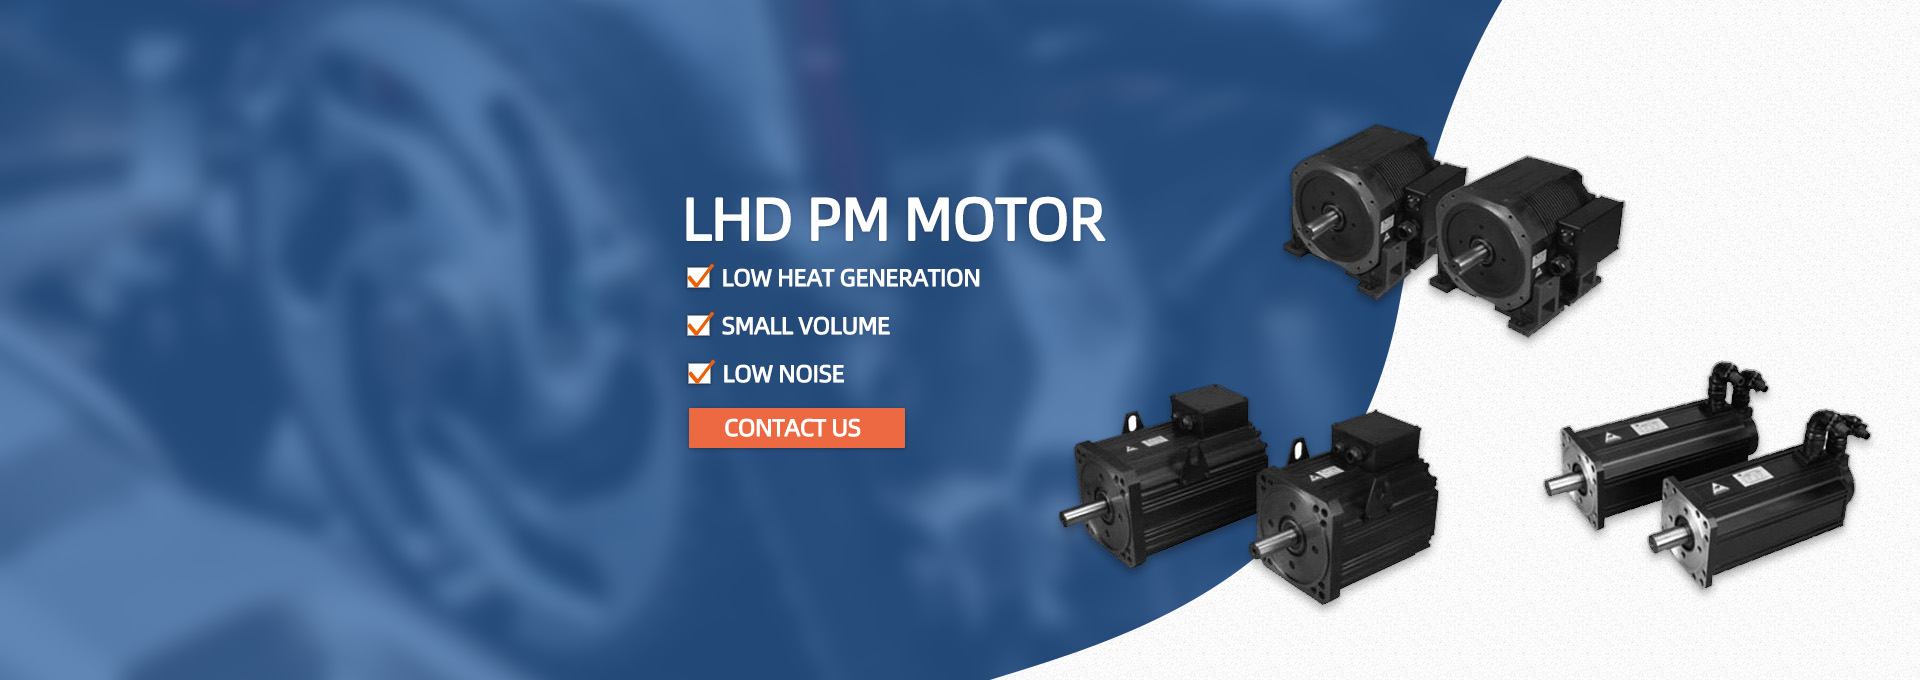 LHD PM motor 